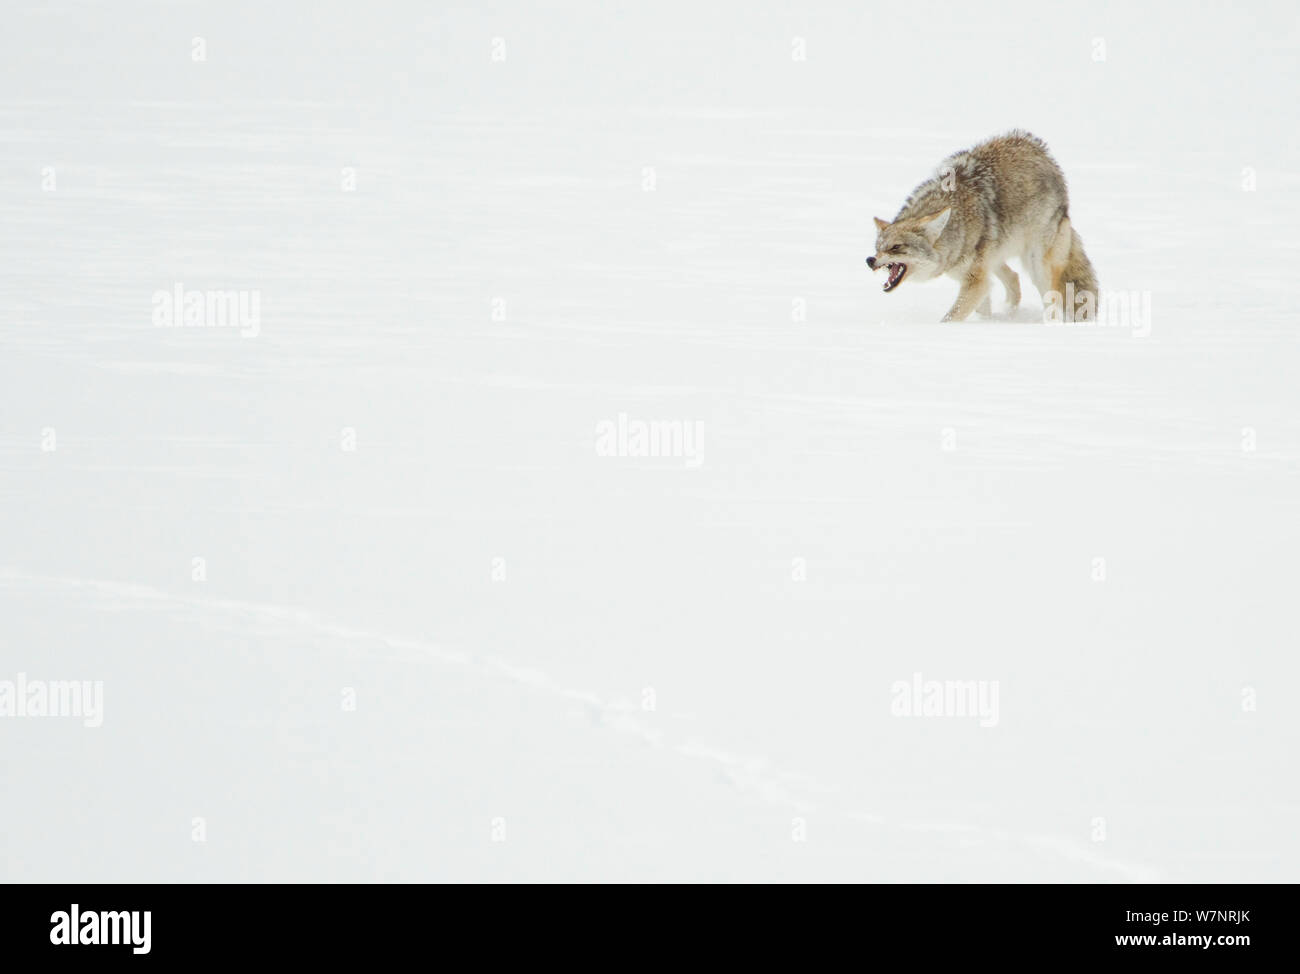 Kojote (Canis yogiebeer) auf Schnee baring Zähne in Aggression. Yellowstone, USA, Februar. Stockfoto